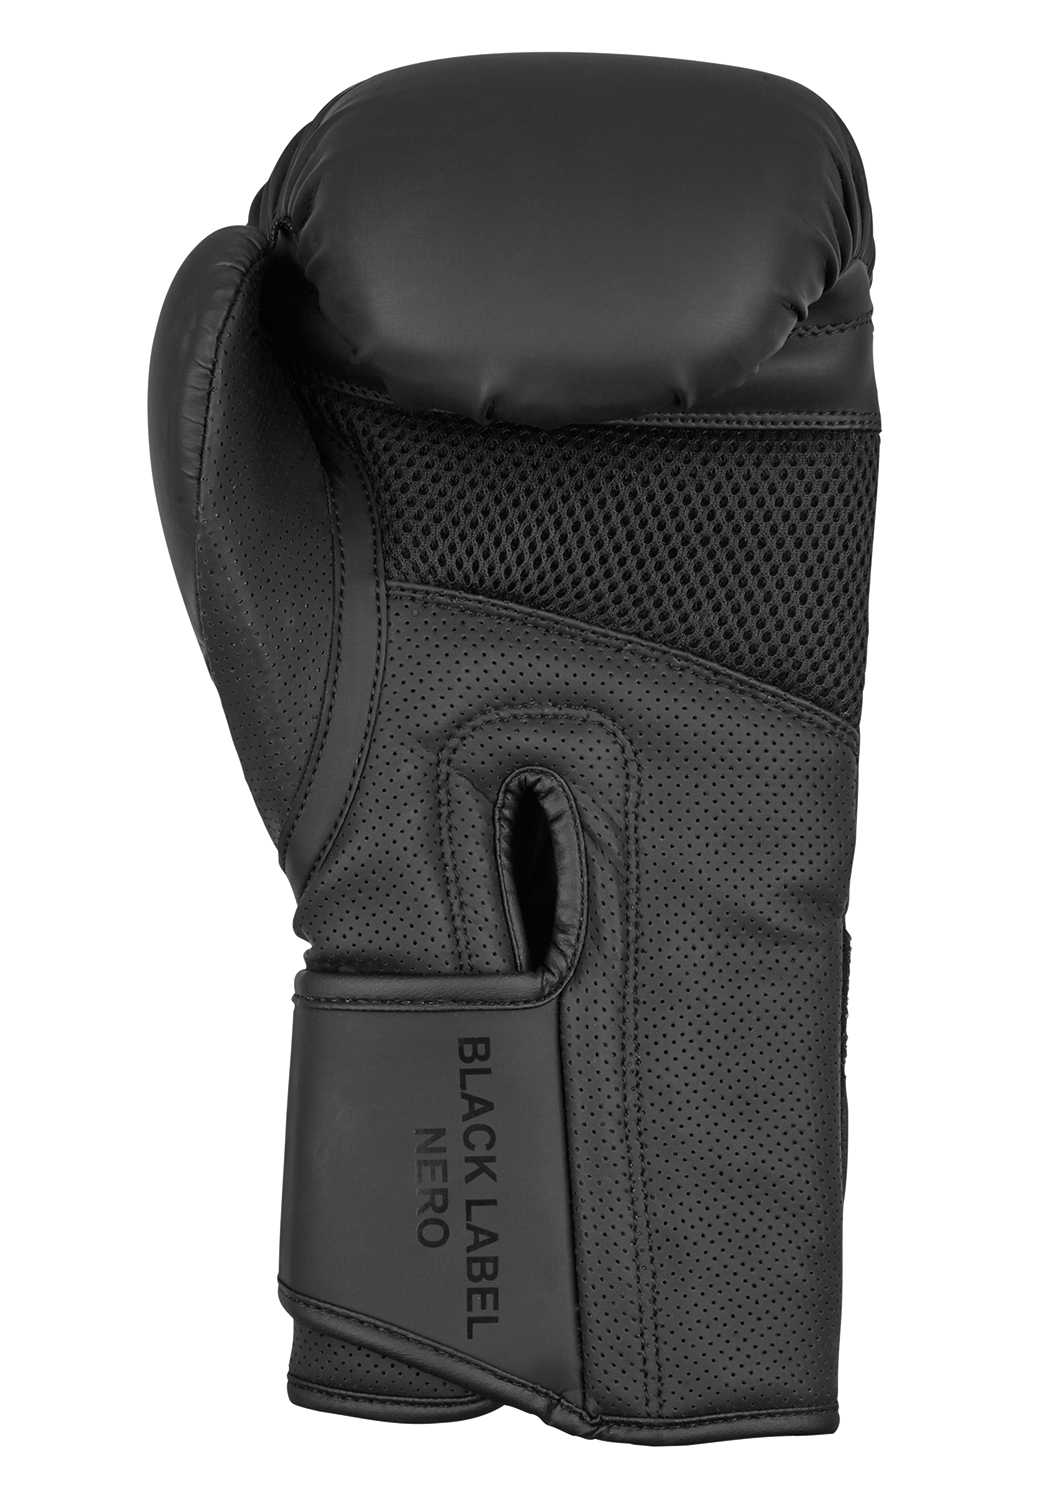 Benlee Black Label Nero boxing gloves 10 oz